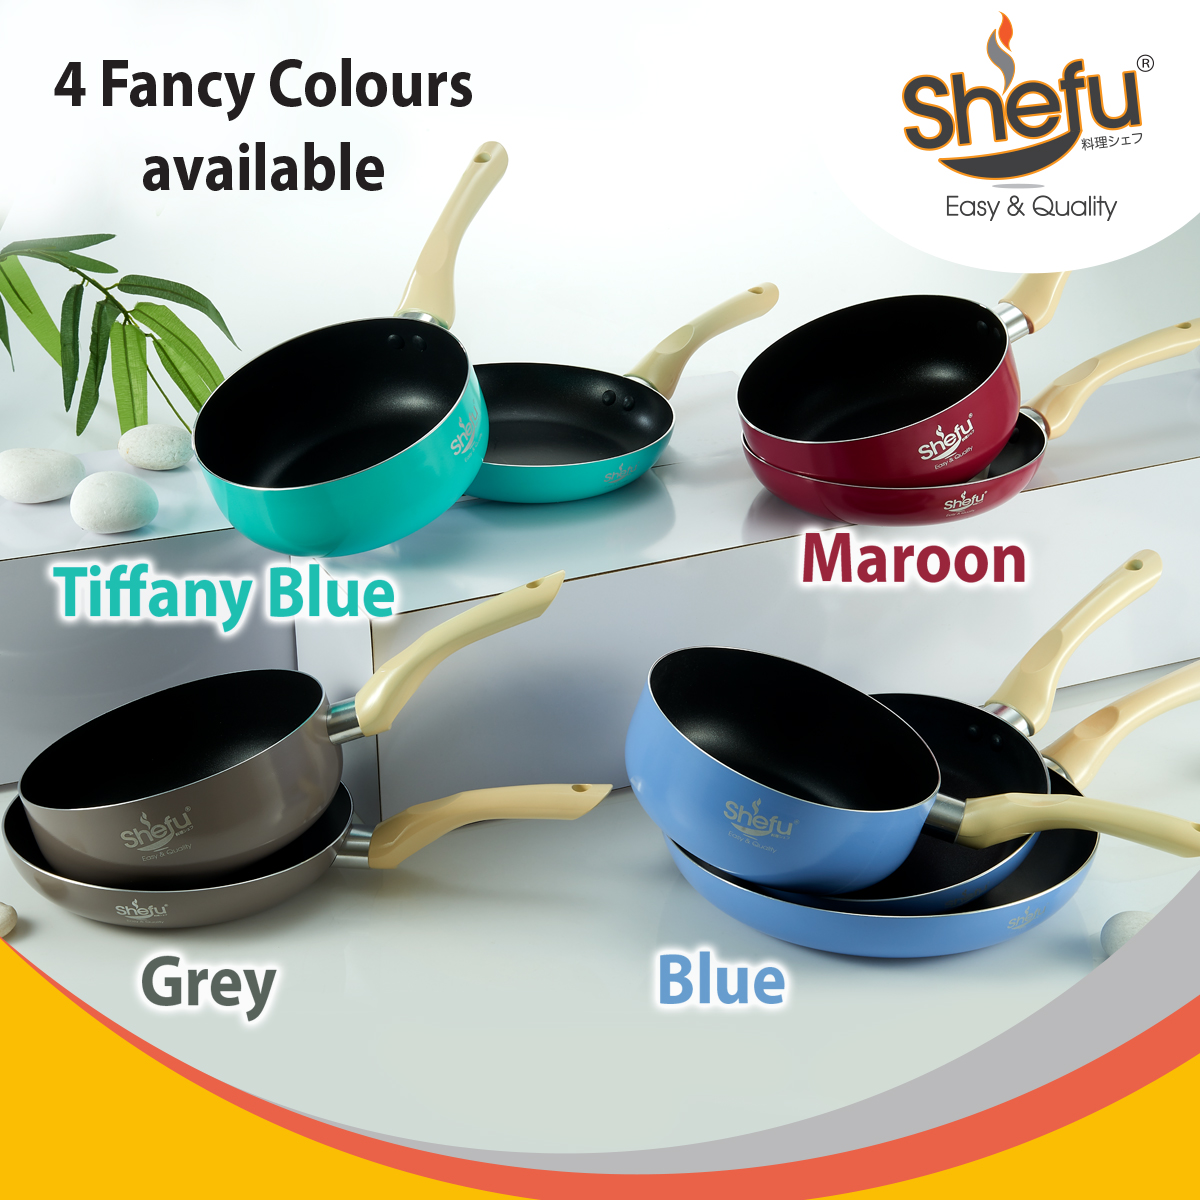 SHEFU 2-In-1 Non-Stick Fancy Cookware Set